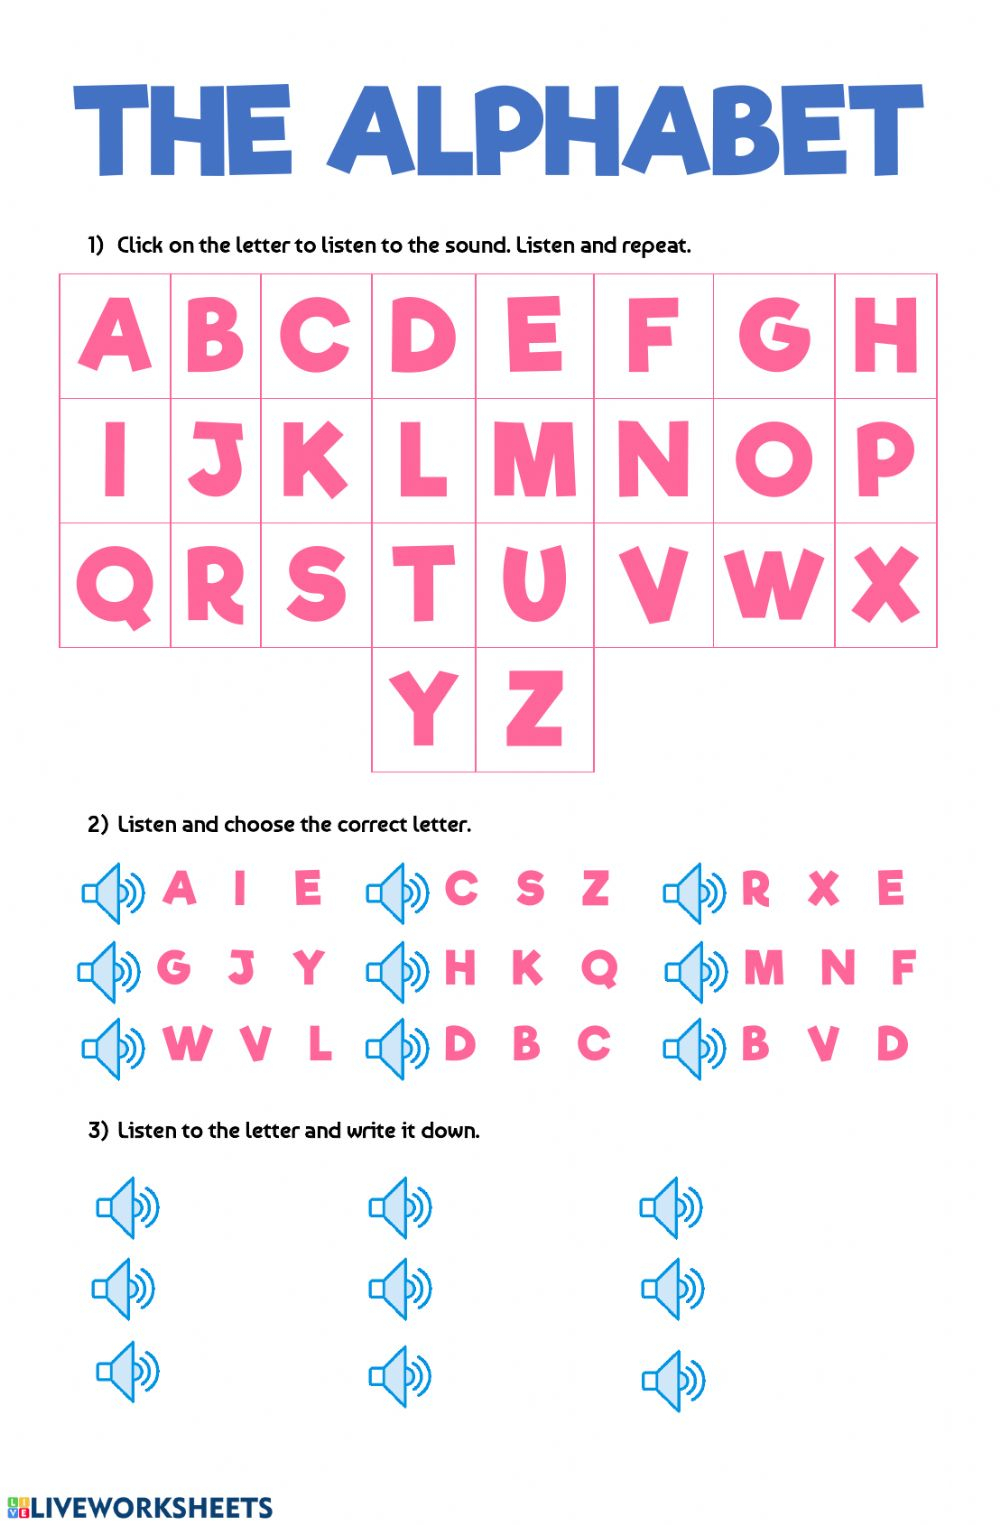 The Alphabet: Alphabet Worksheet throughout The Alphabet Worksheets Esl